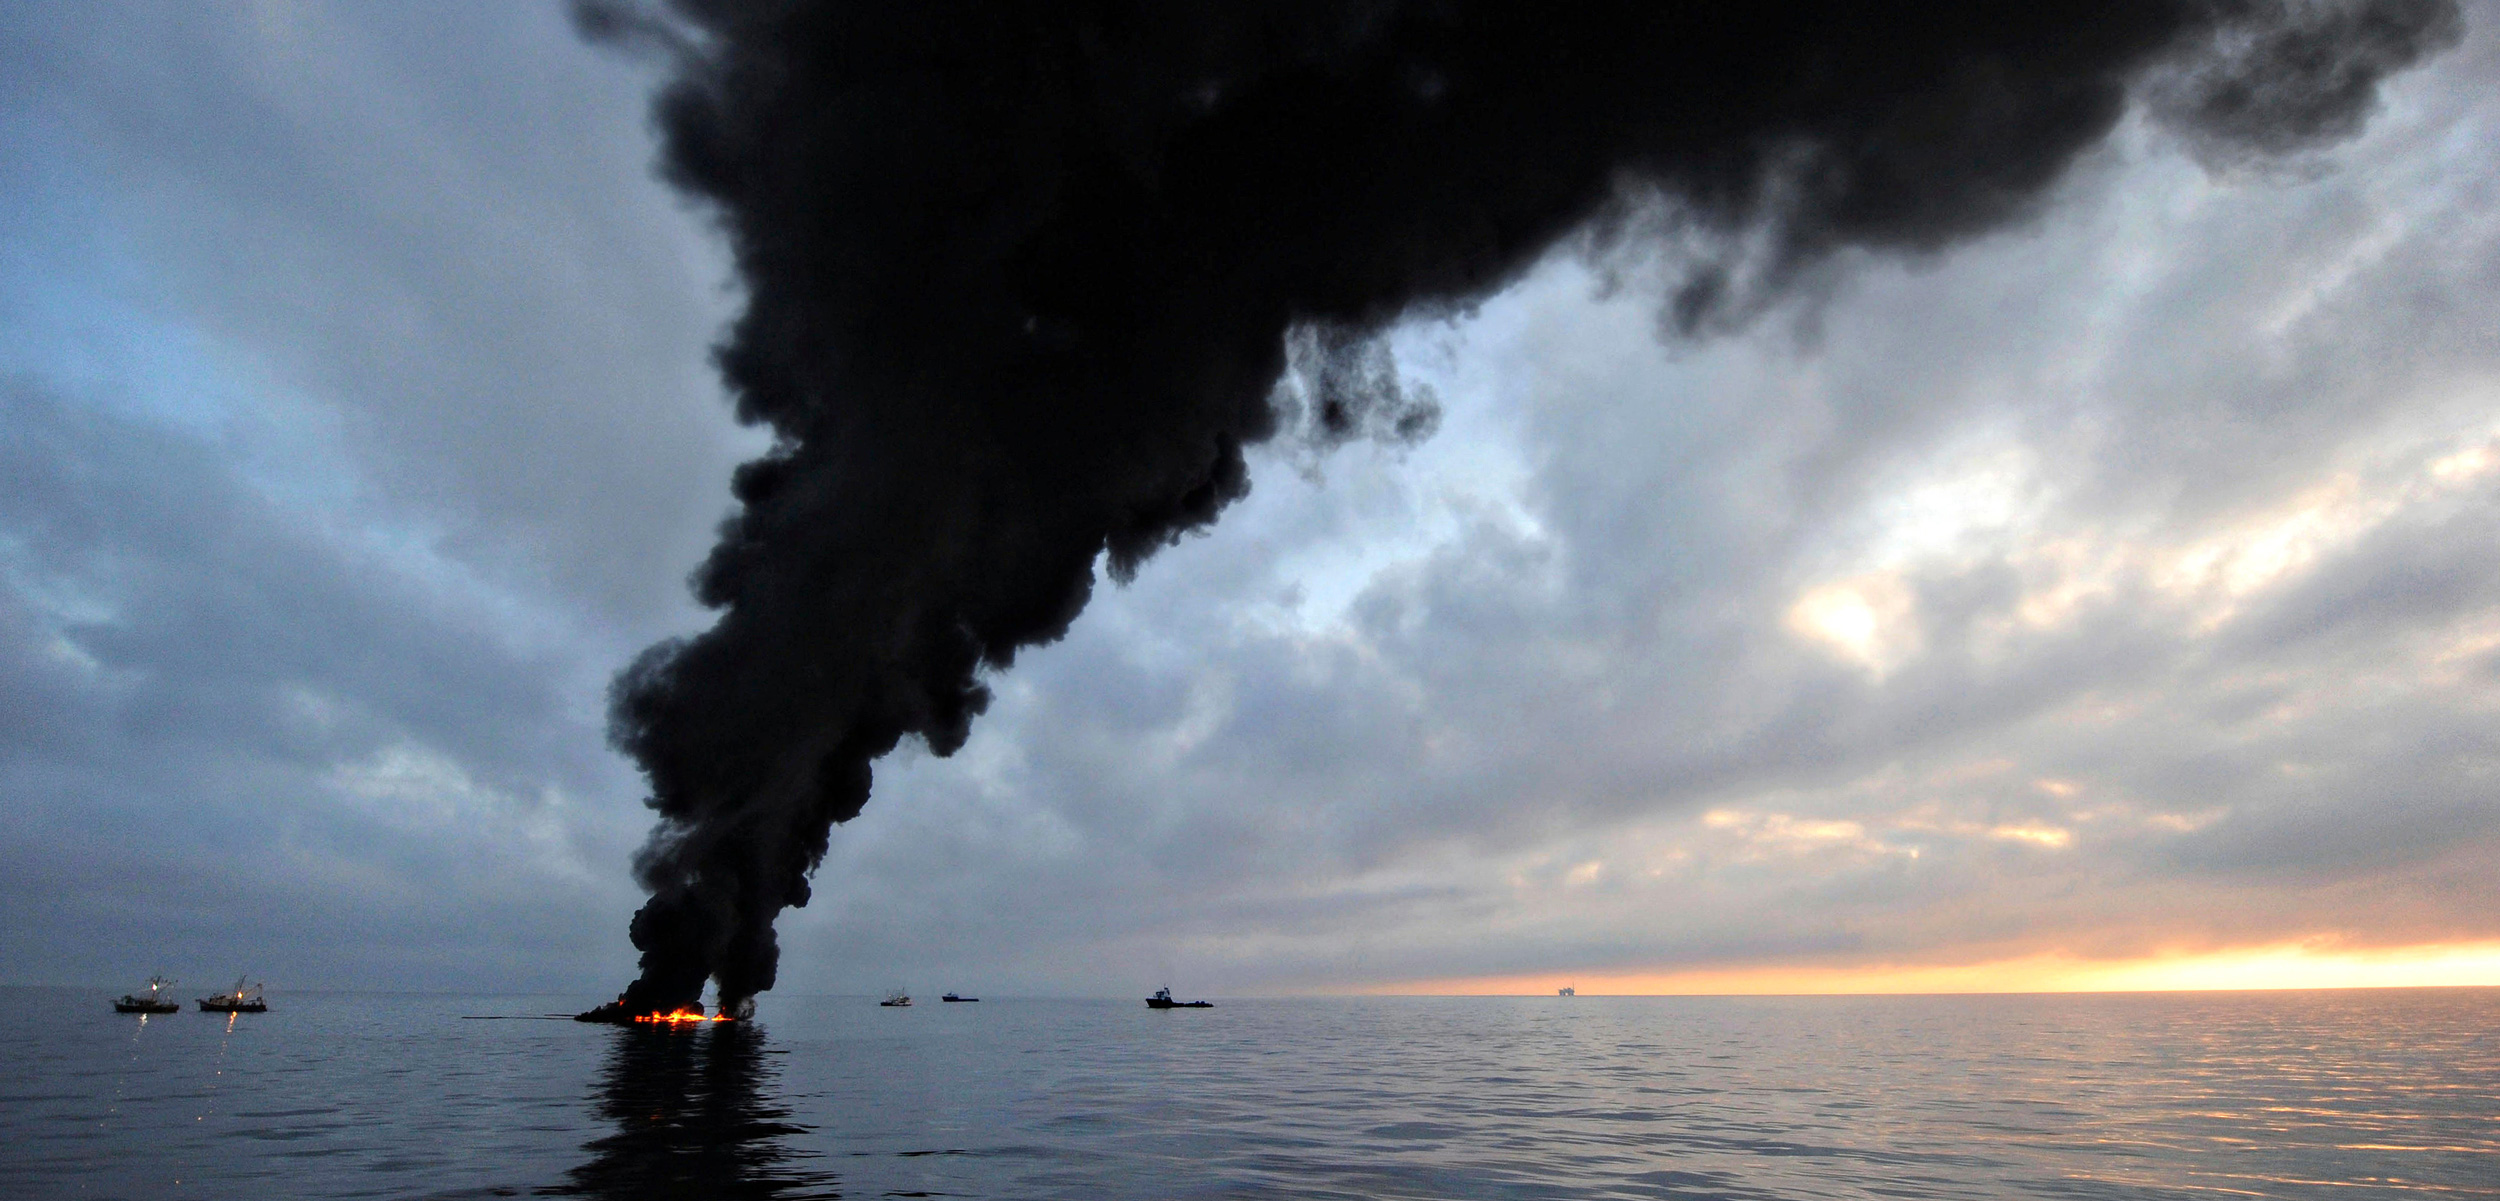 oil from Deepwater Horizon spill being burned